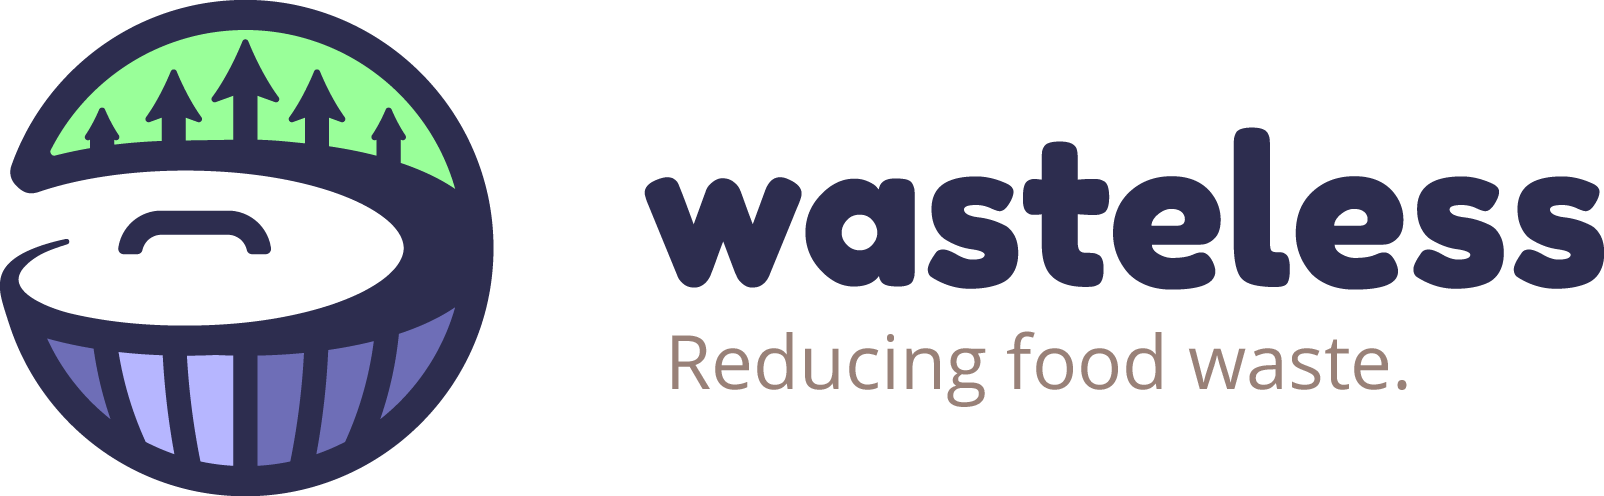 Wasteless logo w subtitle